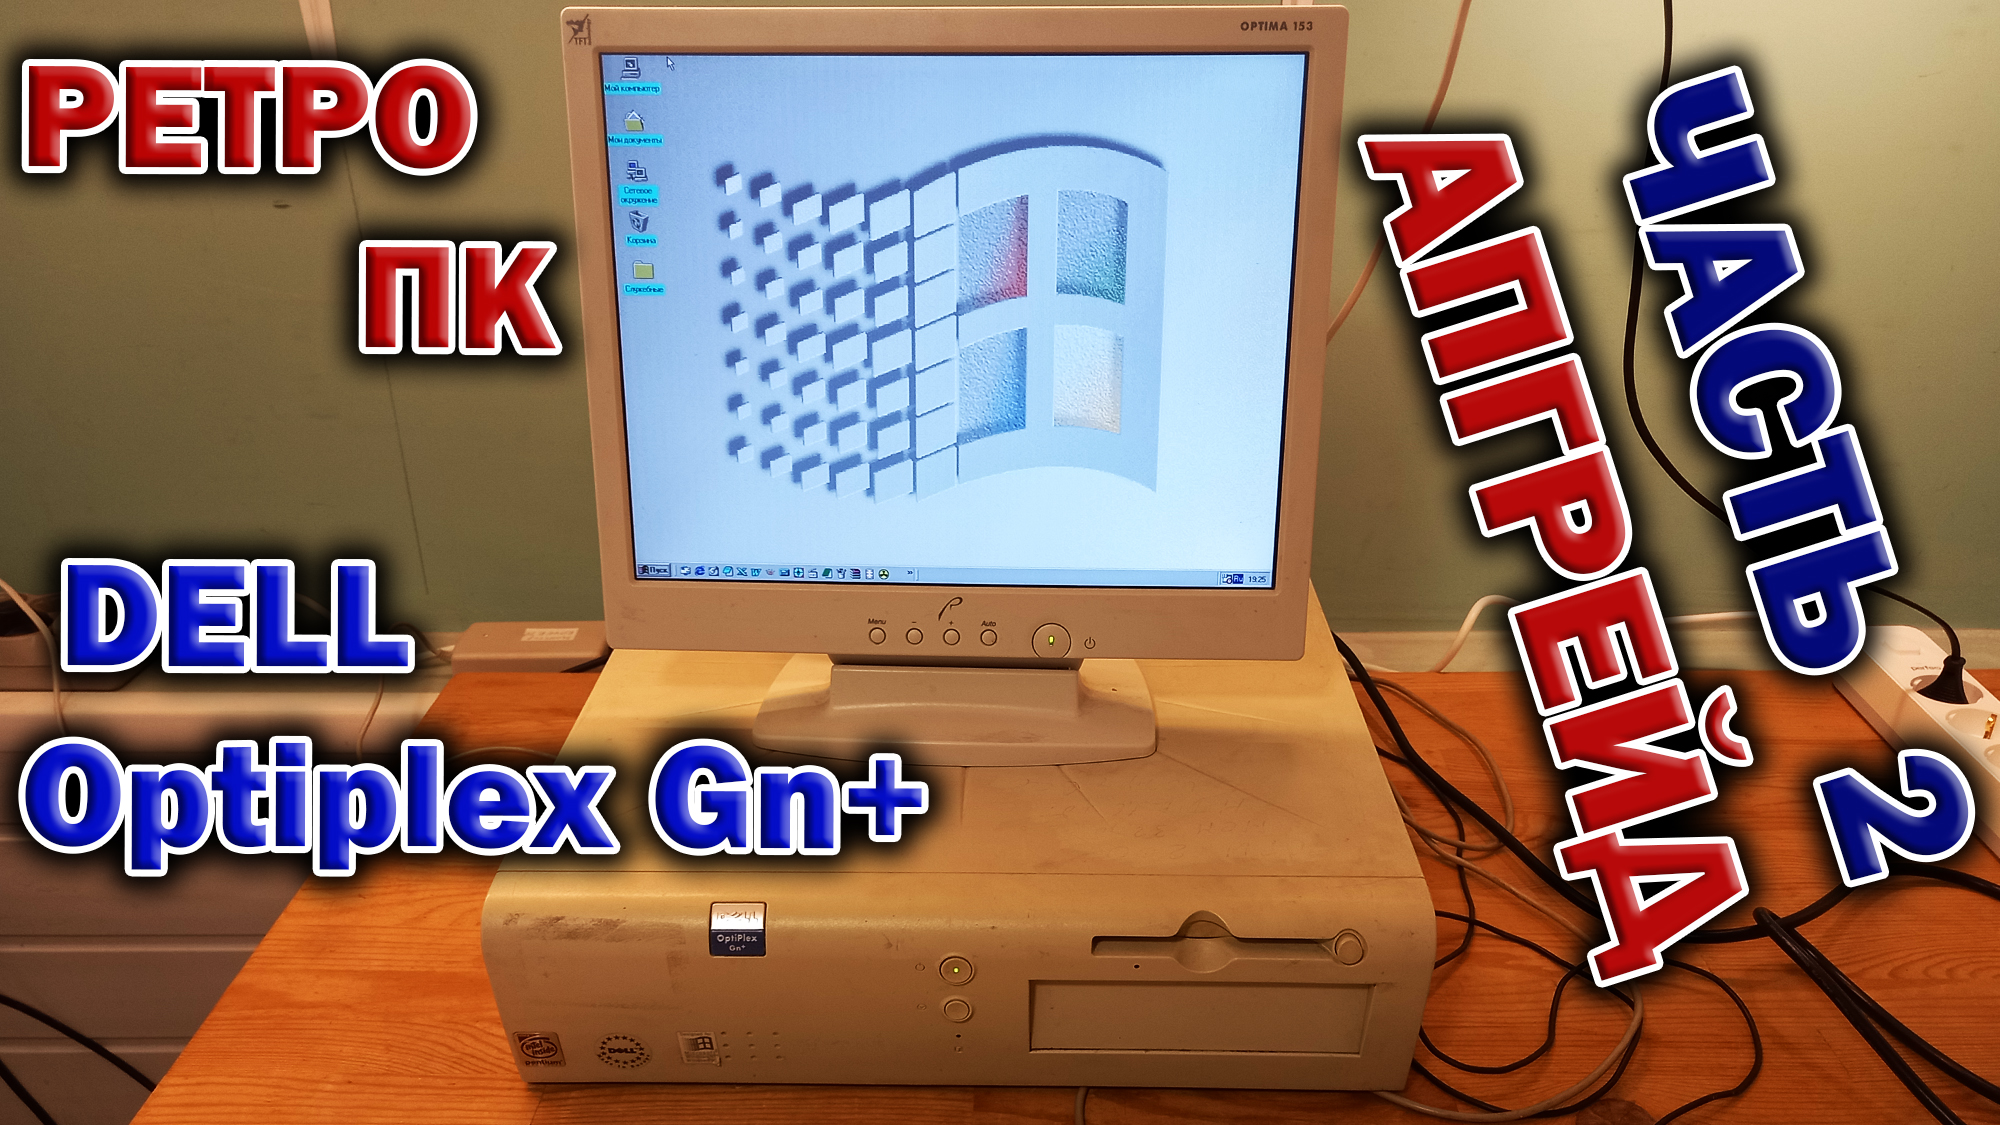 Фирменный ретро ПК 1998 года - Dell Optiplex Gn+. Время апгрейда !